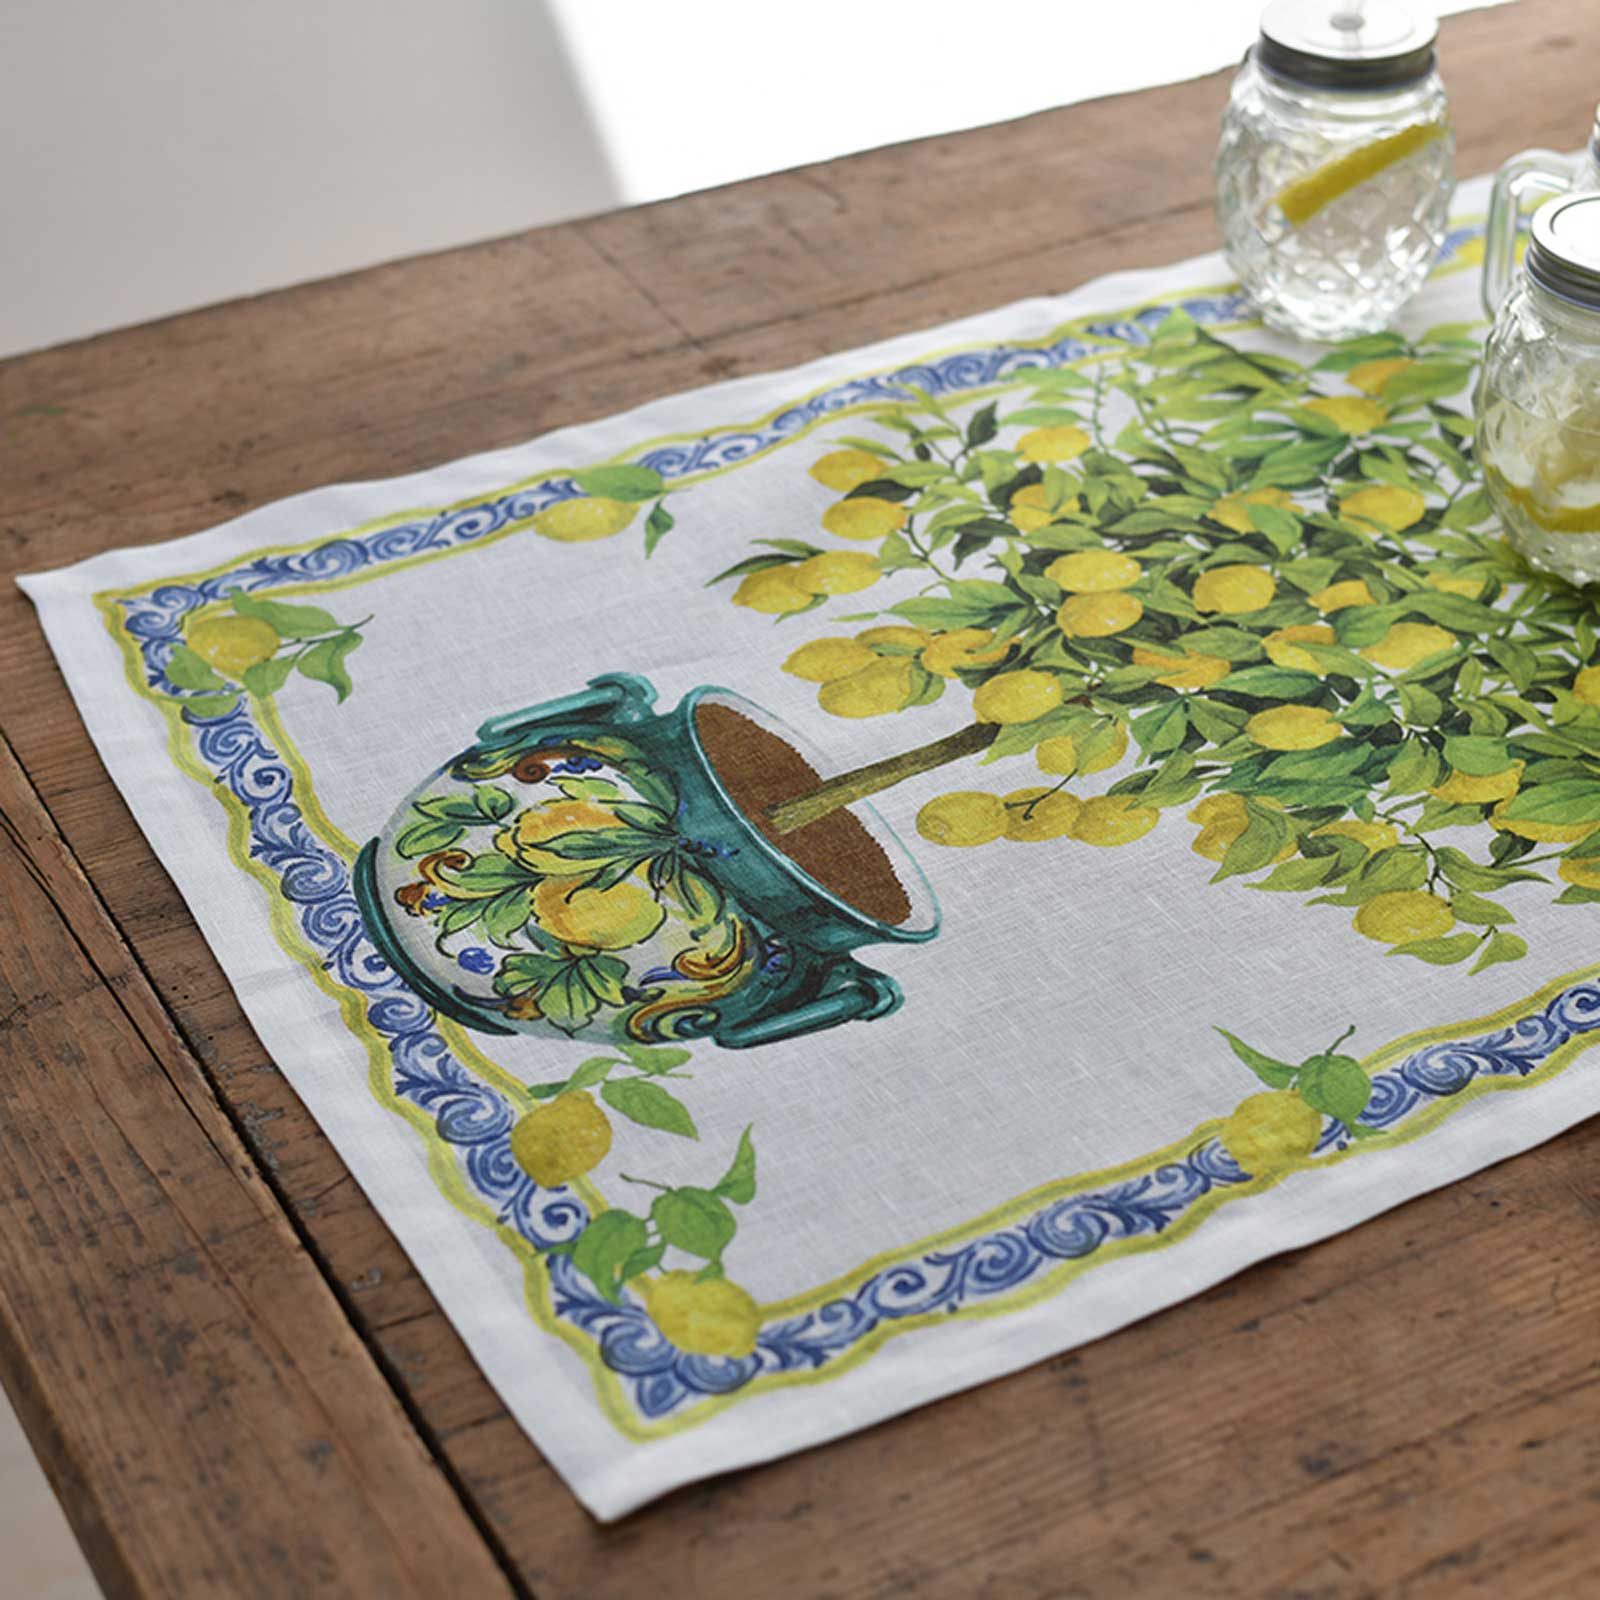 Tessitura Toscana Telerie, “Limonaia”, Pure linen printed table runner.